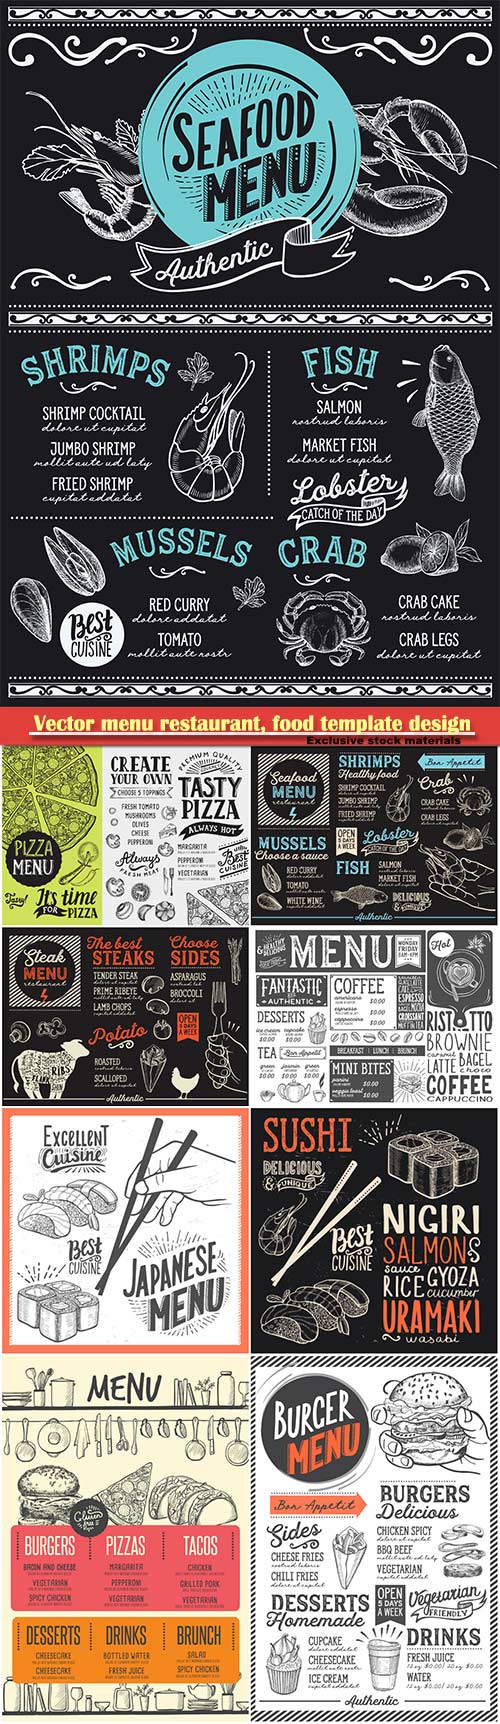 Vector menu restaurant, food template design